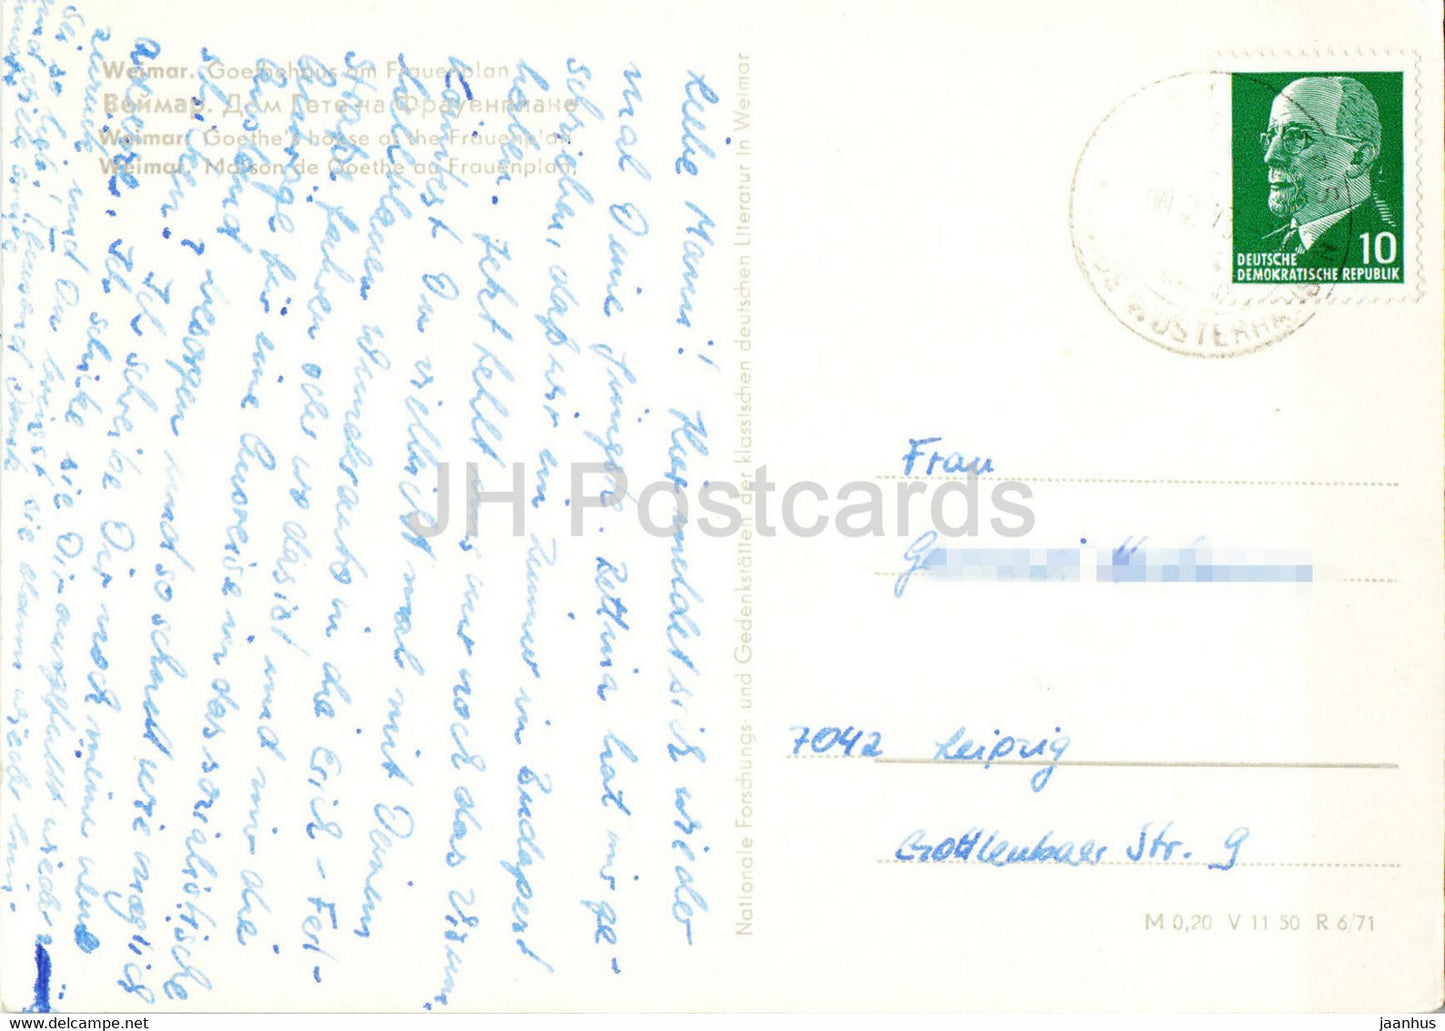 Weimar - Goethehaus am Frauenplan - old postcard - Germany DDR - used